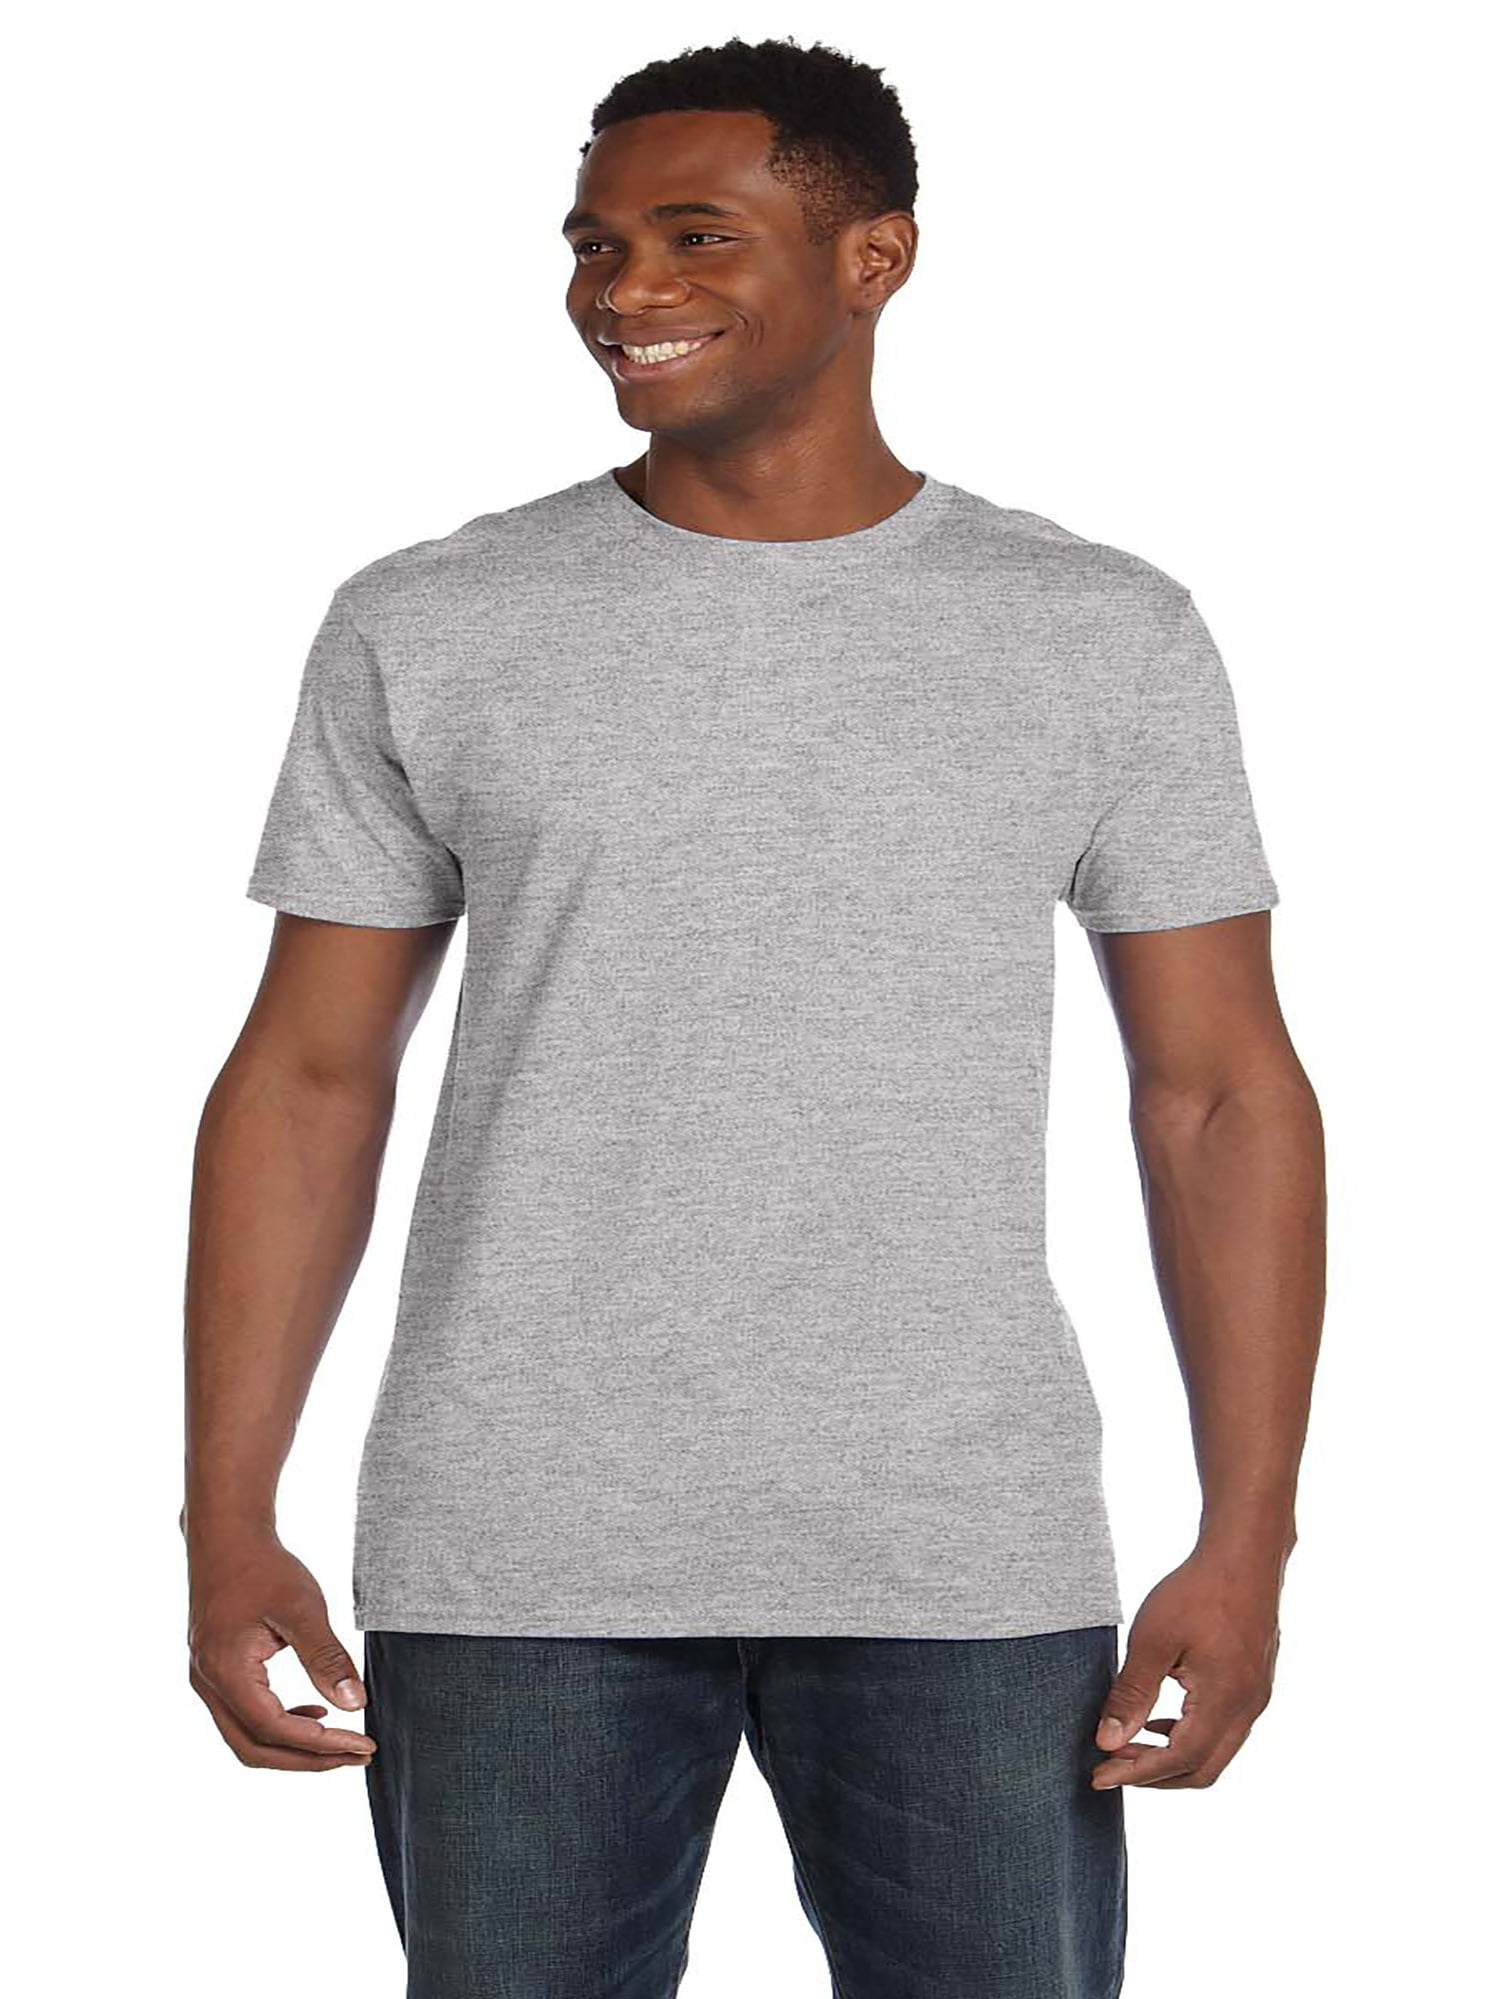 Hanes Mens Nano T T Shirt 100% Cotton Lightweight Tee S M L XL 2XL 3XL 4980 